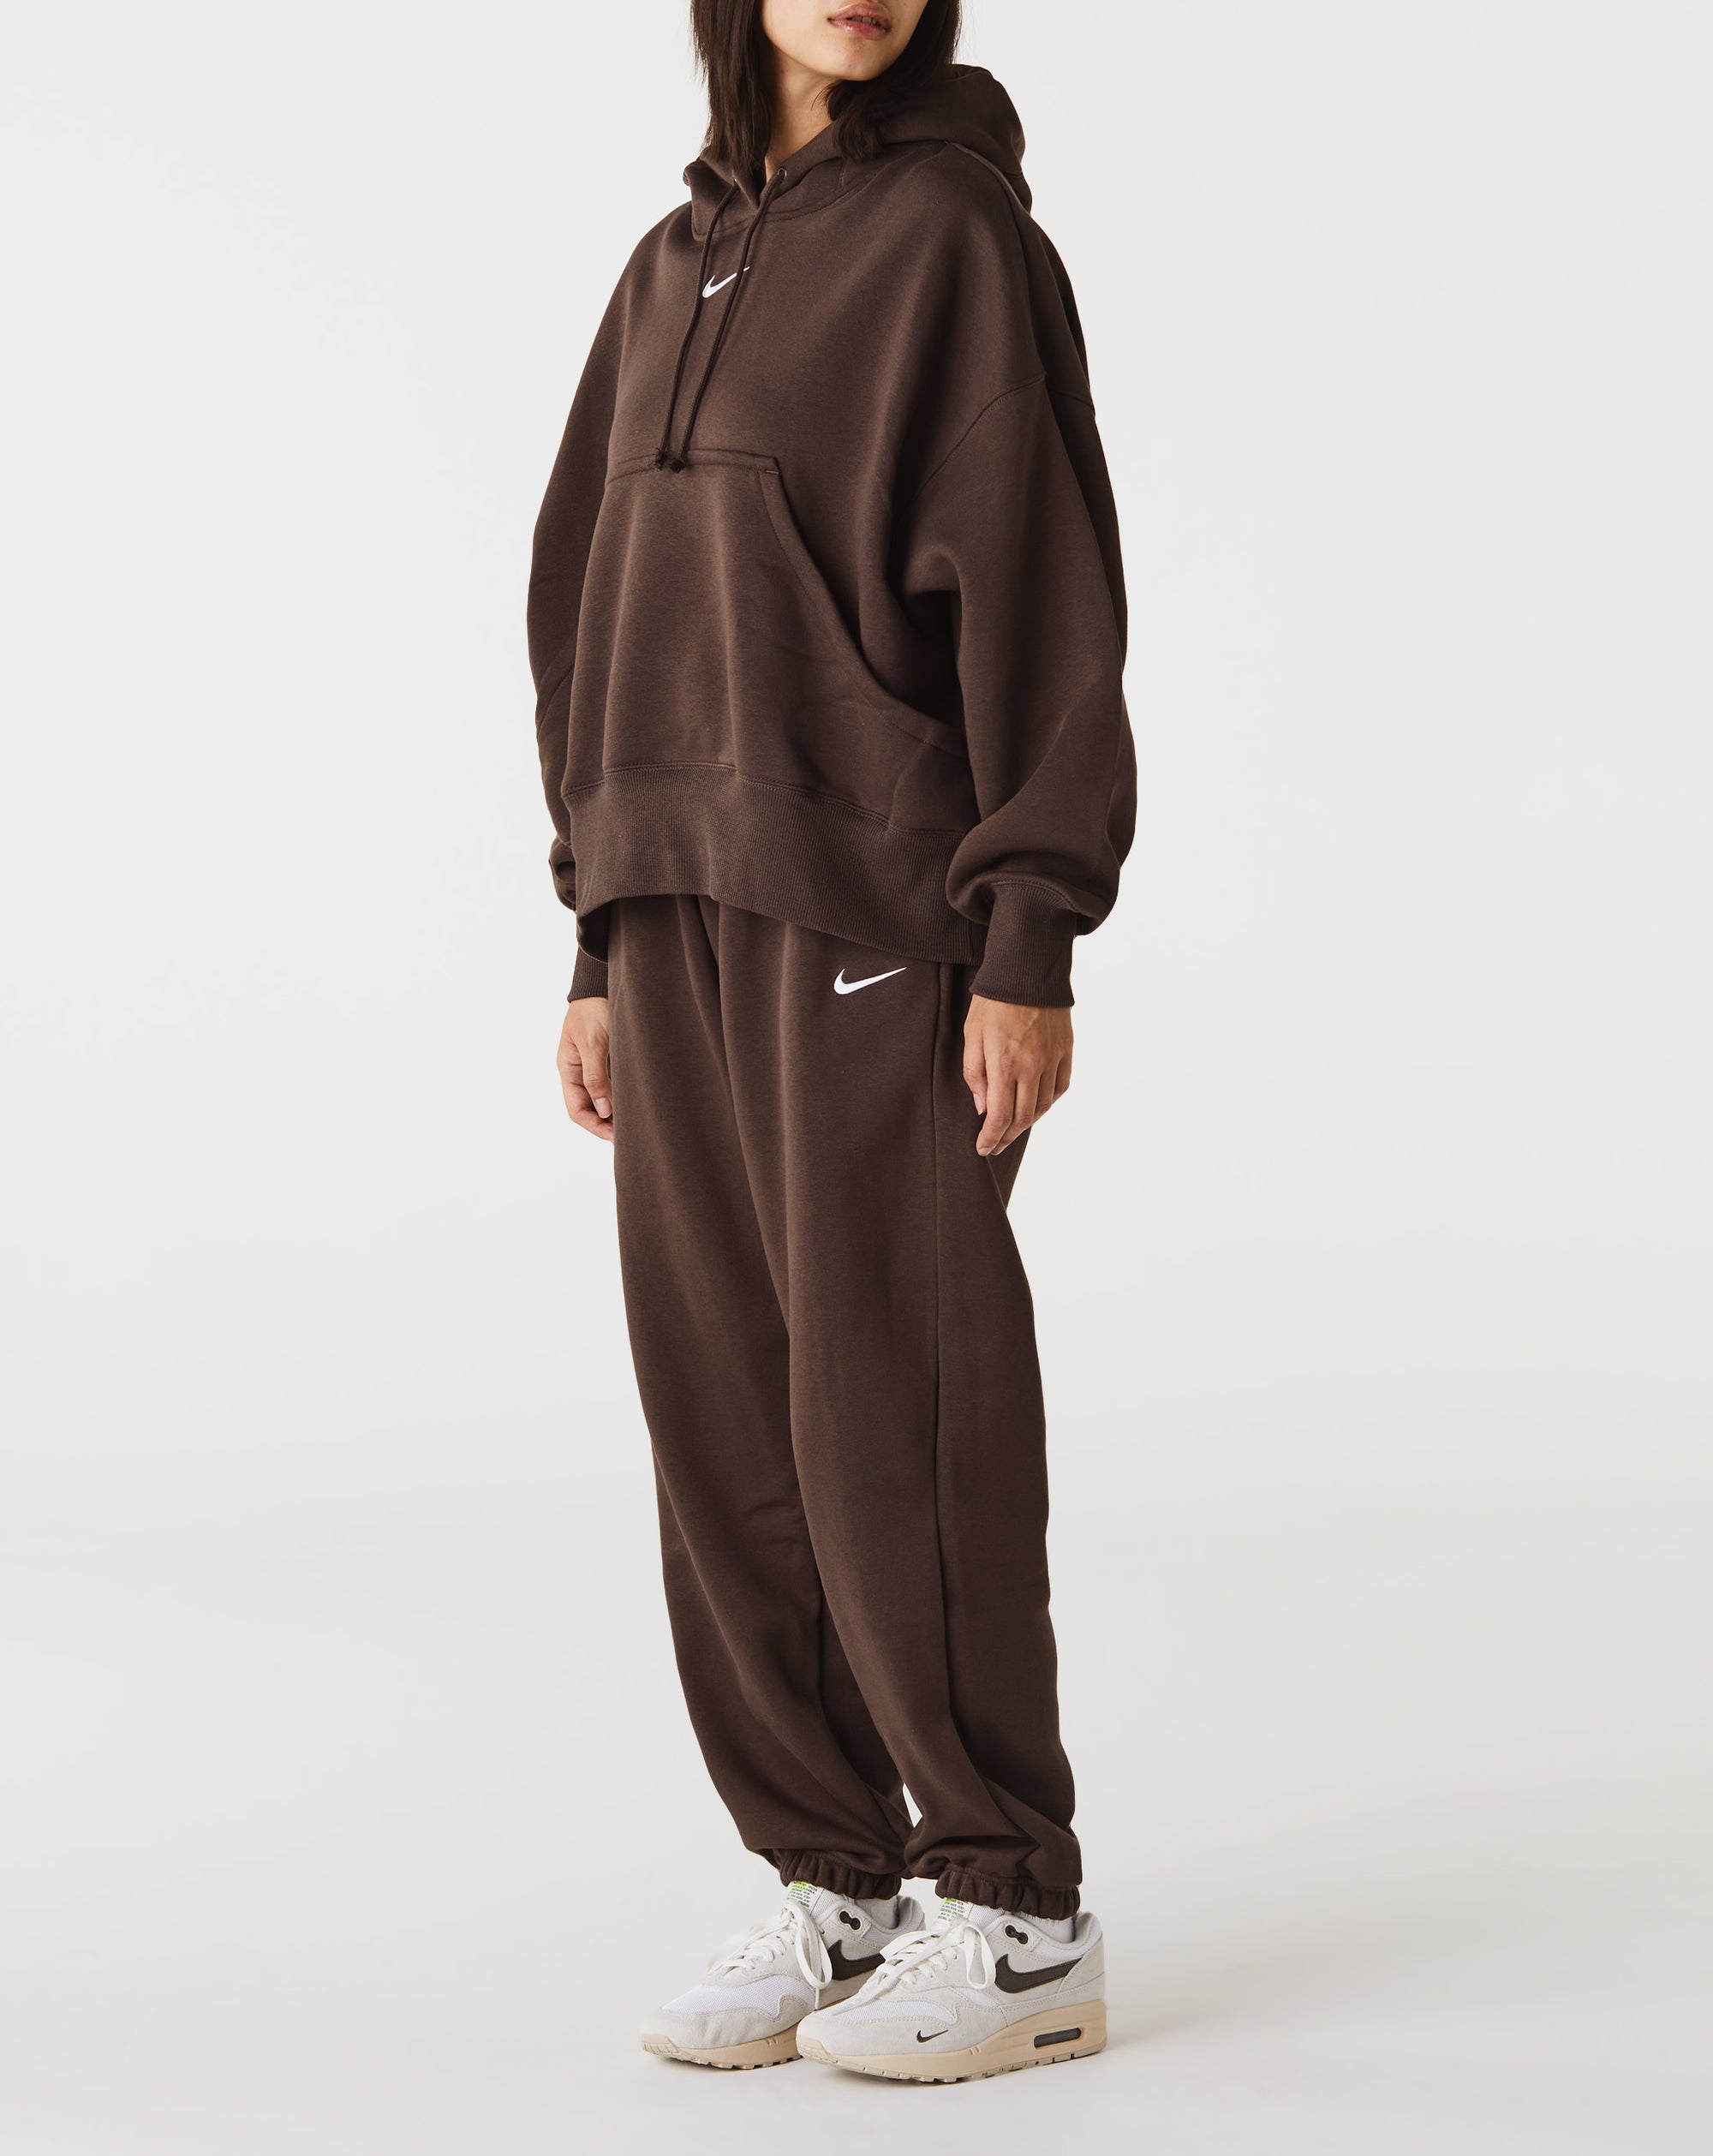 Nike Phoenix Fleece sweatpants in brown